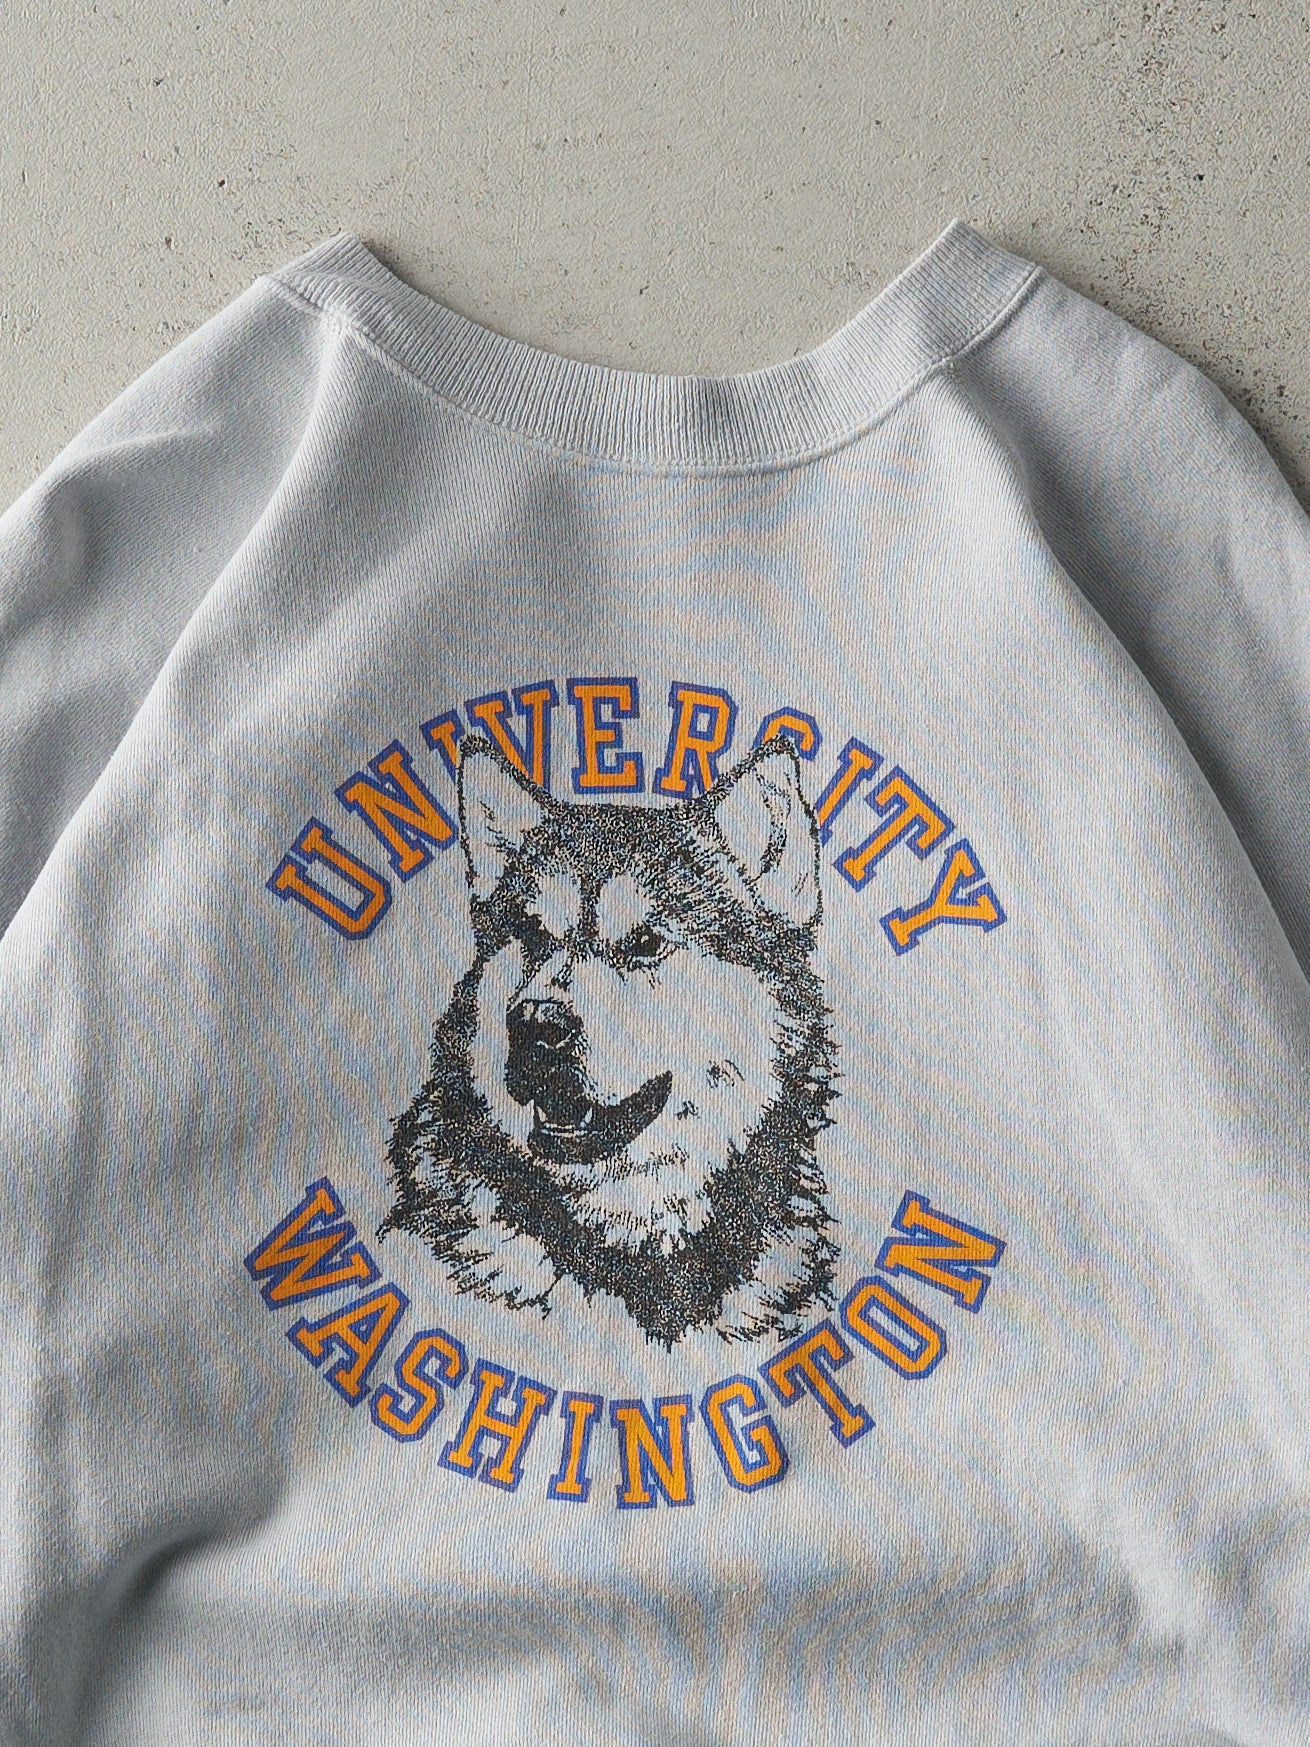 Vintage 80s Grey University of Washington Crewneck (M)